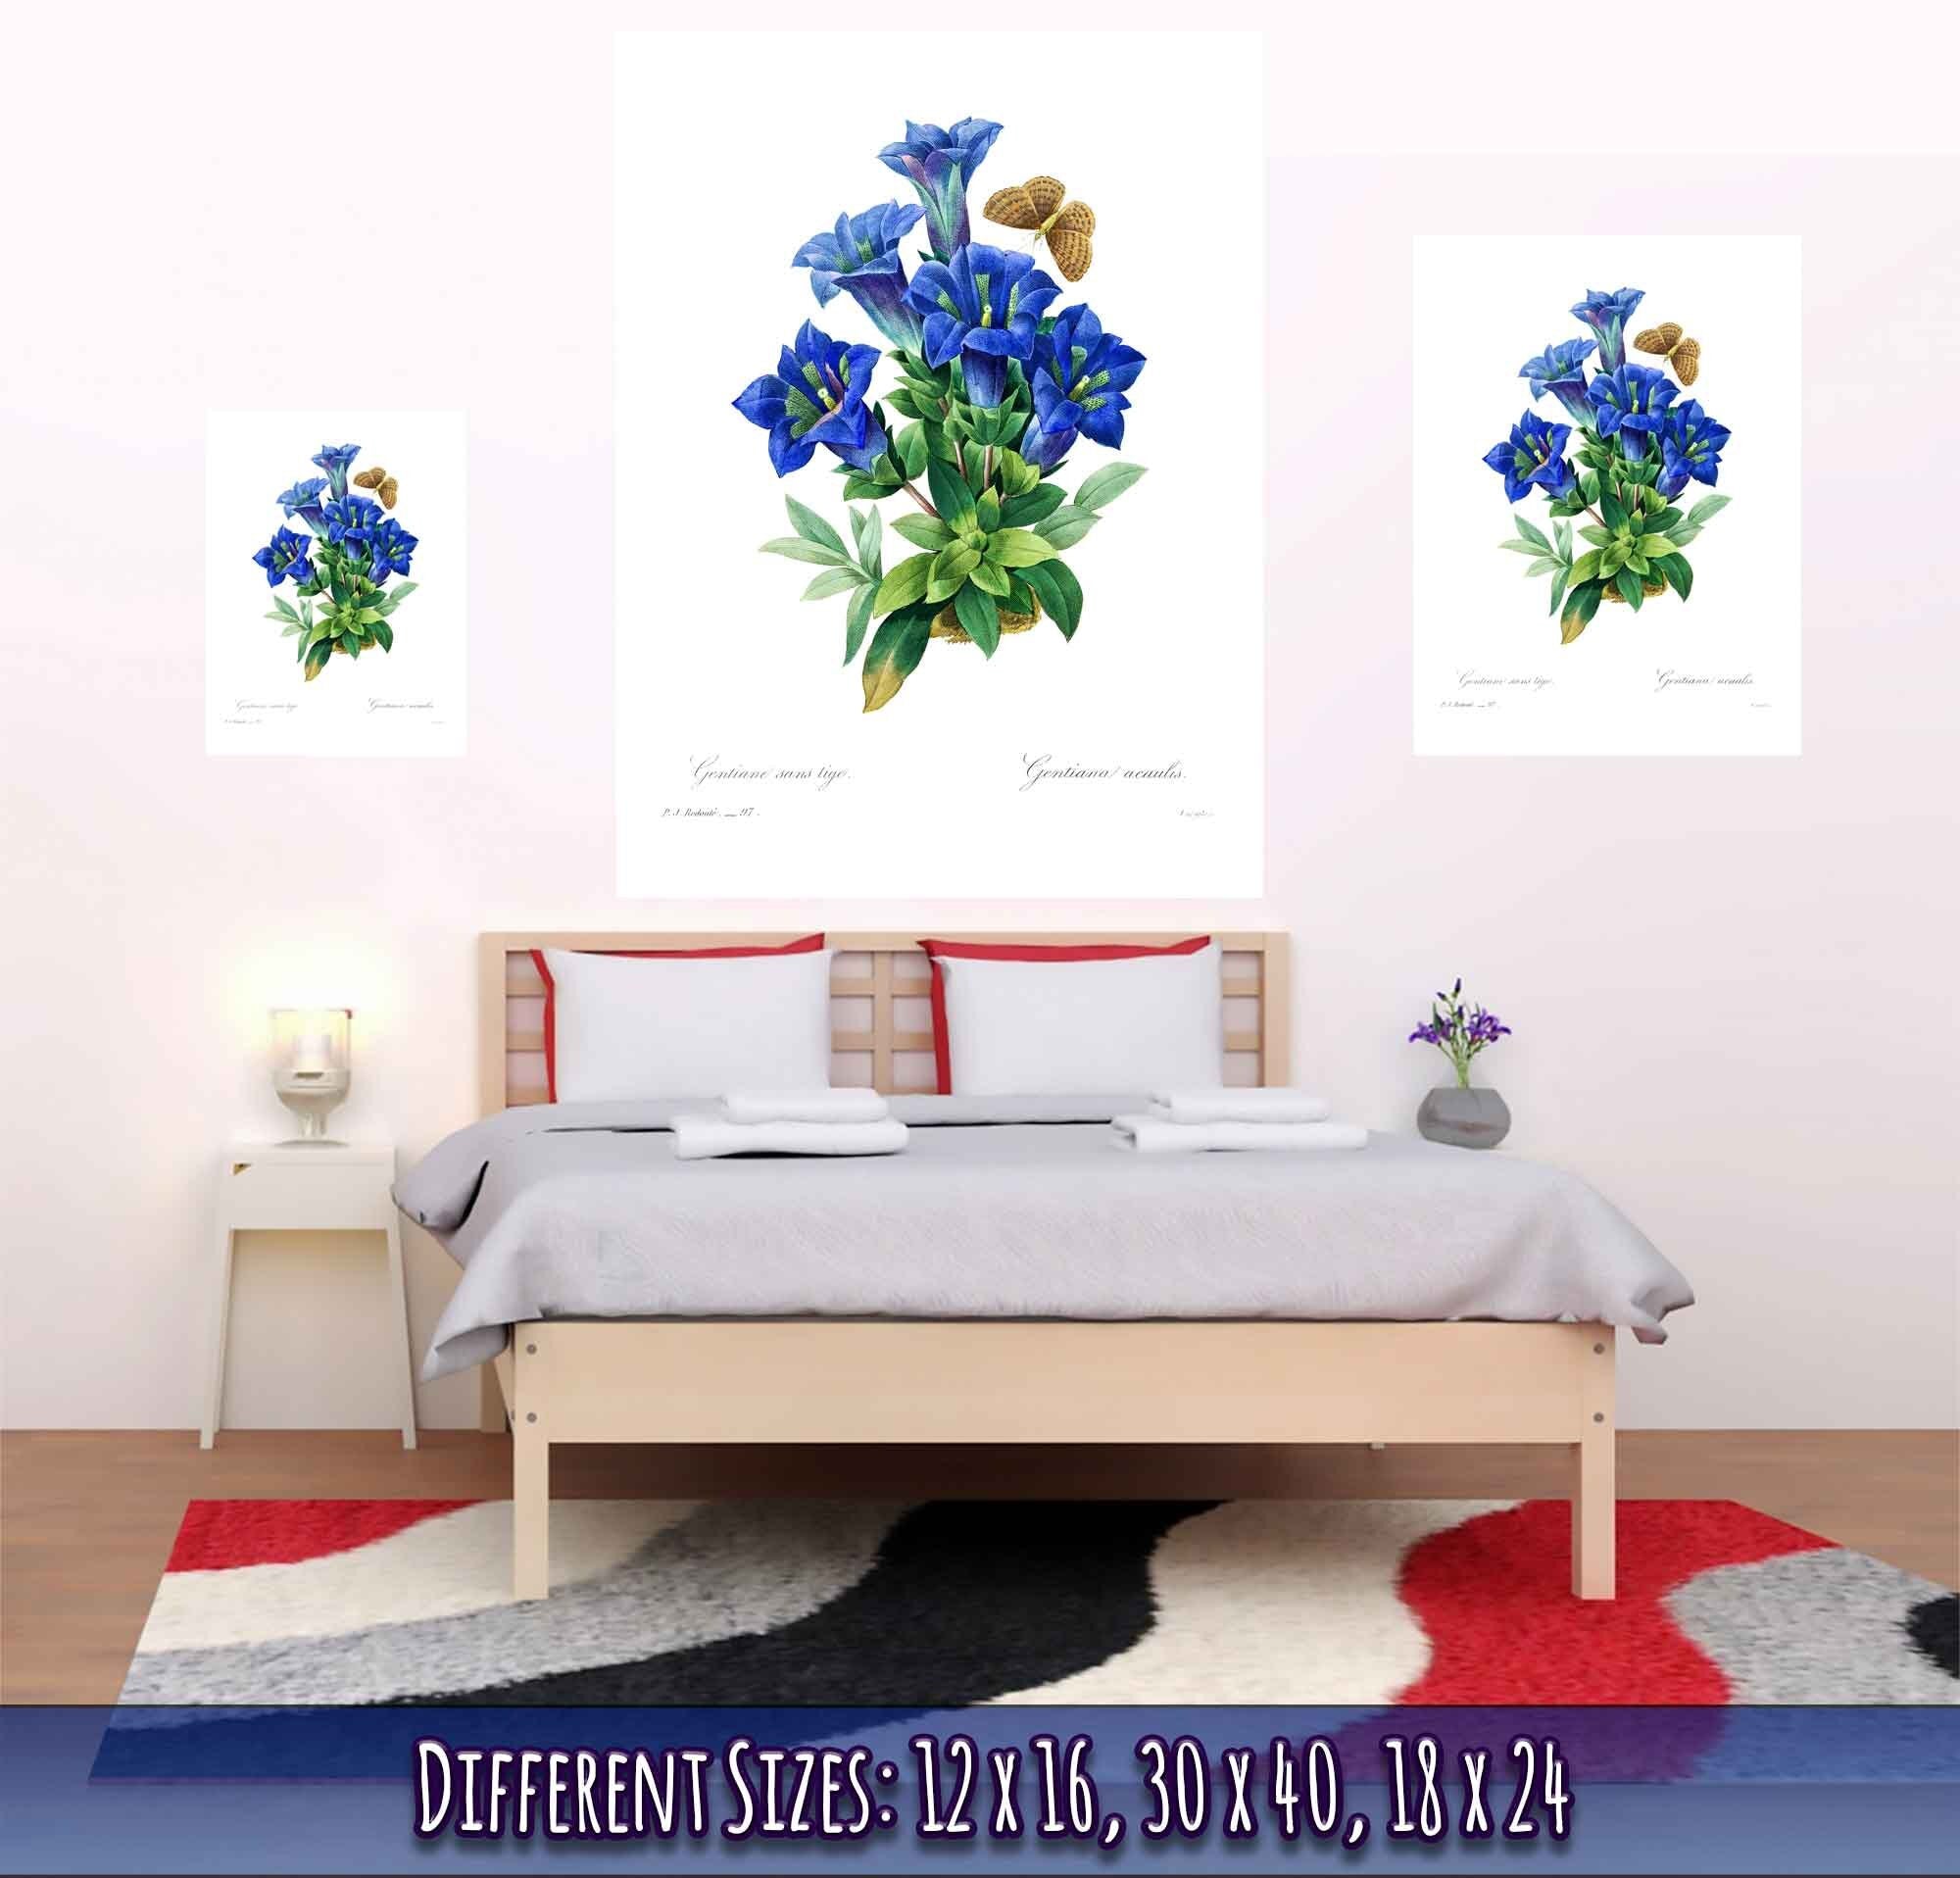 Vintage Gentiana Blue Flower Poster - Botanical Blue Flower Print - Pierre Joseph Redoute - WallArtPrints4U